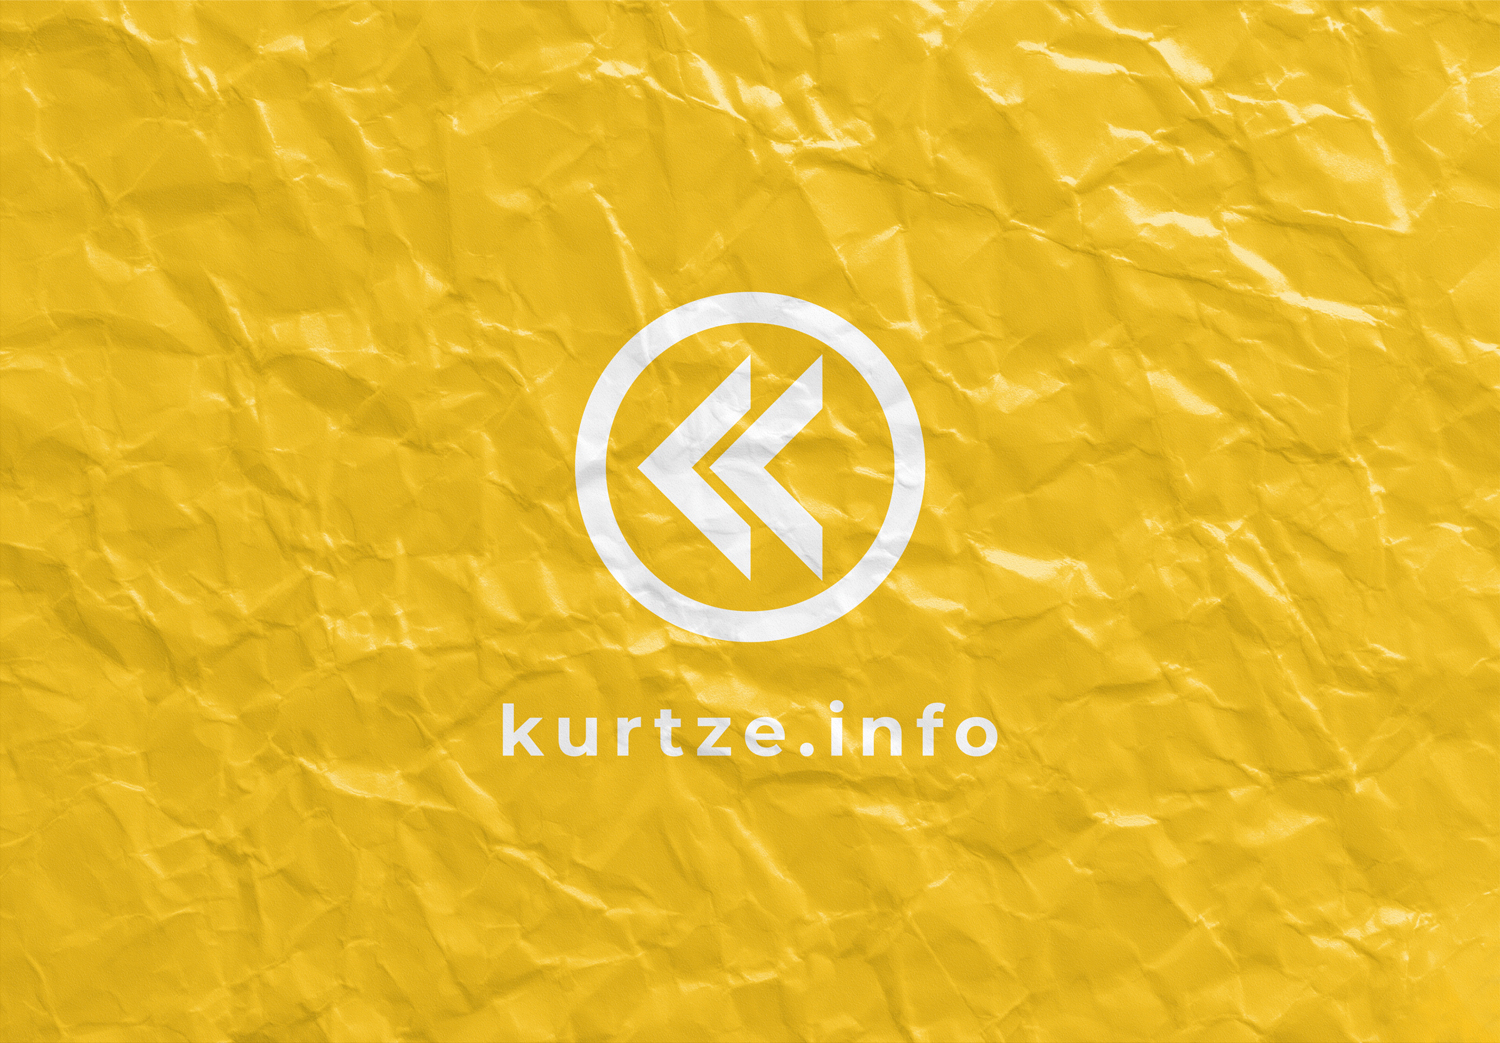 (c) Kurtze.info